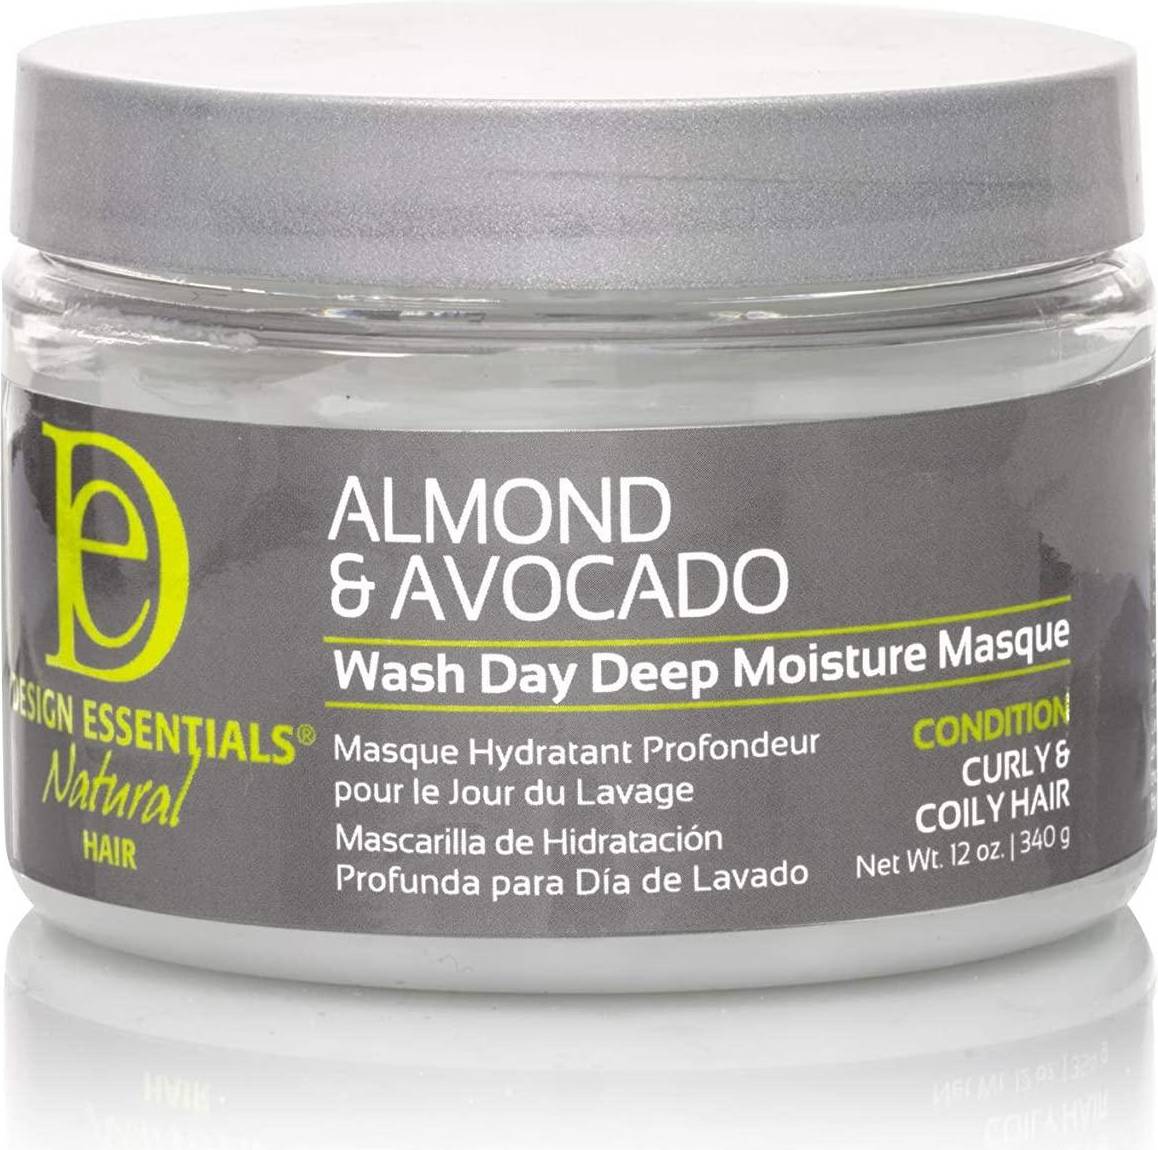 Design Essentials Wash Day Deep Moisture Masque Almond And Avocado 340g • Pris 8158